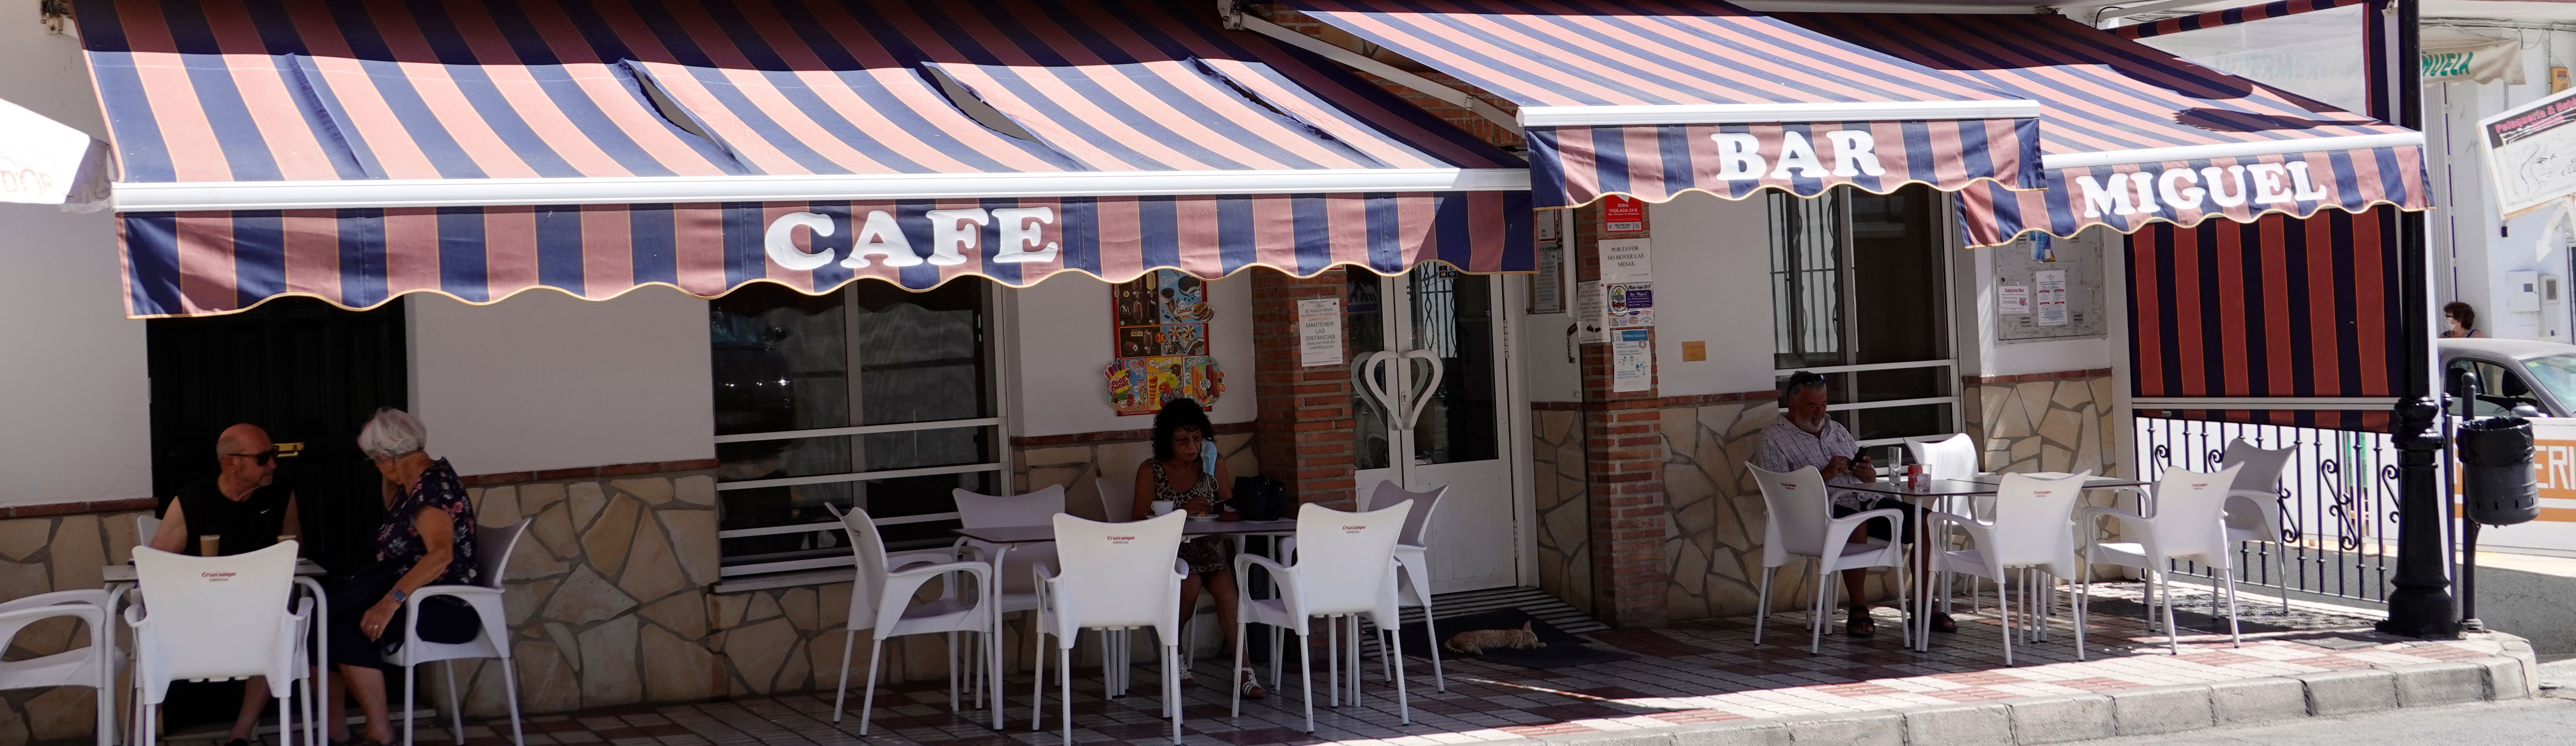 Café - Bar Miguel